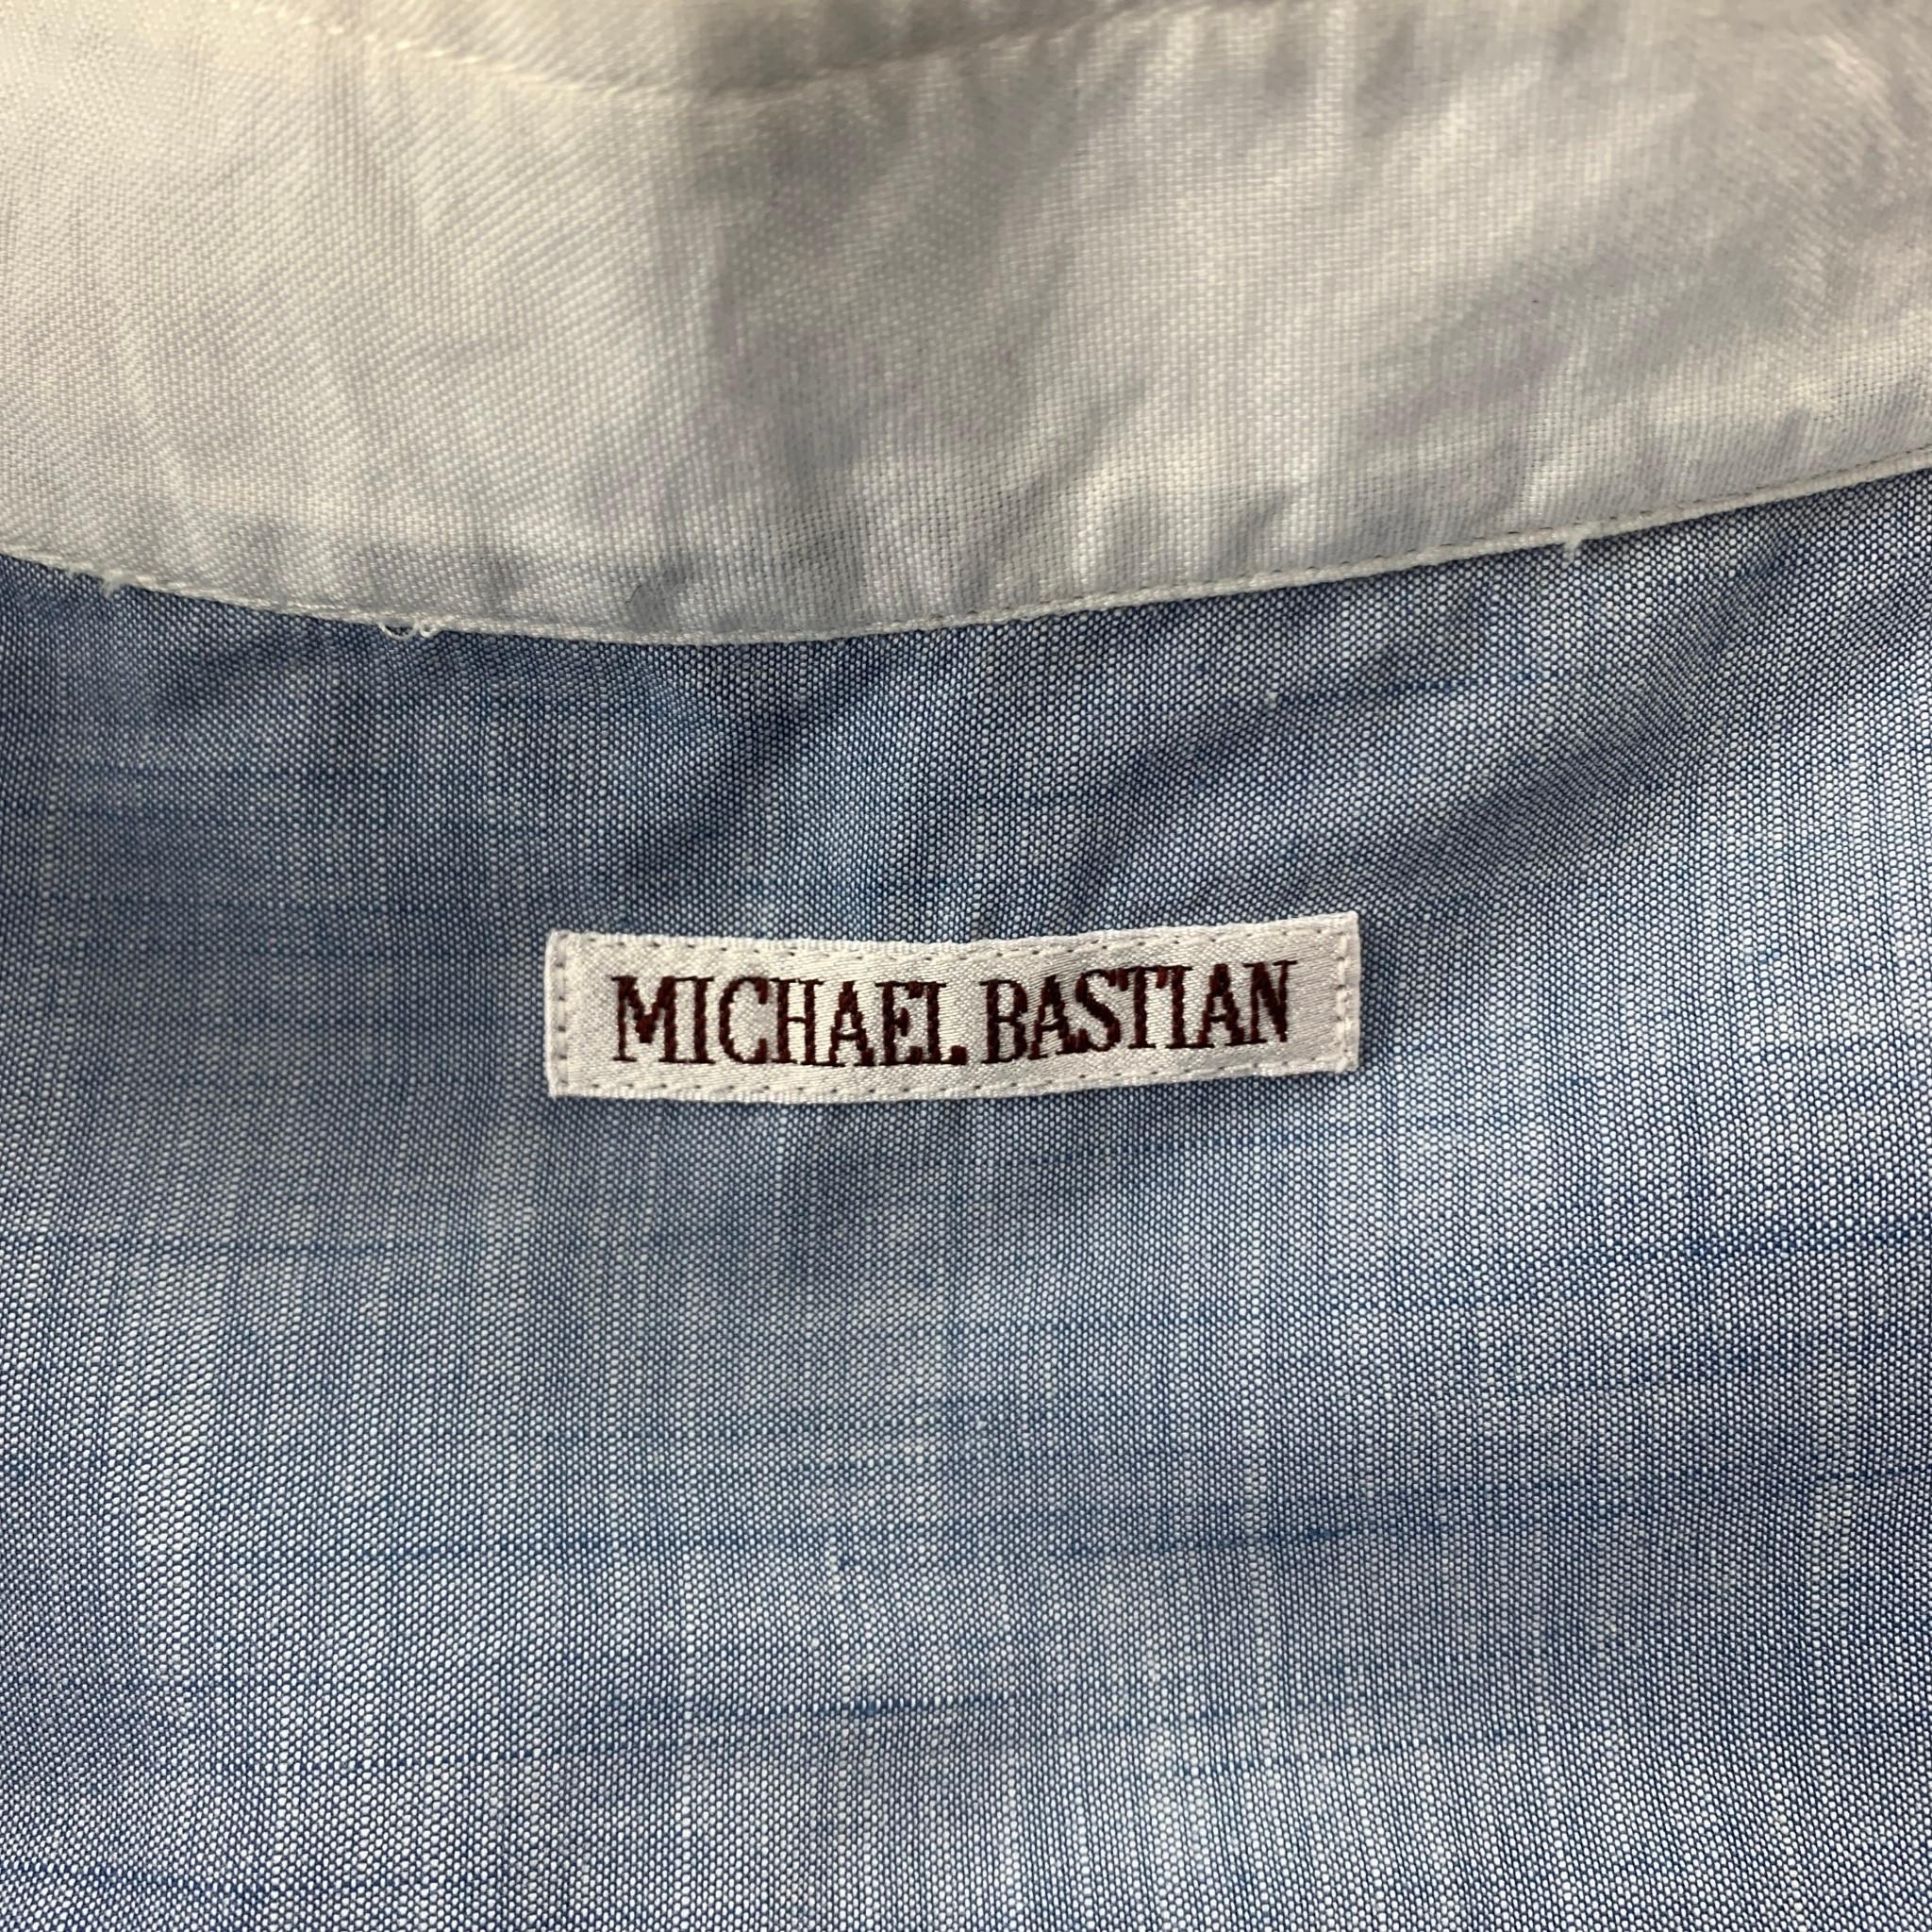 Women's MICHAEL BASTIAN Size L Blue & White Pleated Cotton Long Sleeve Shirt